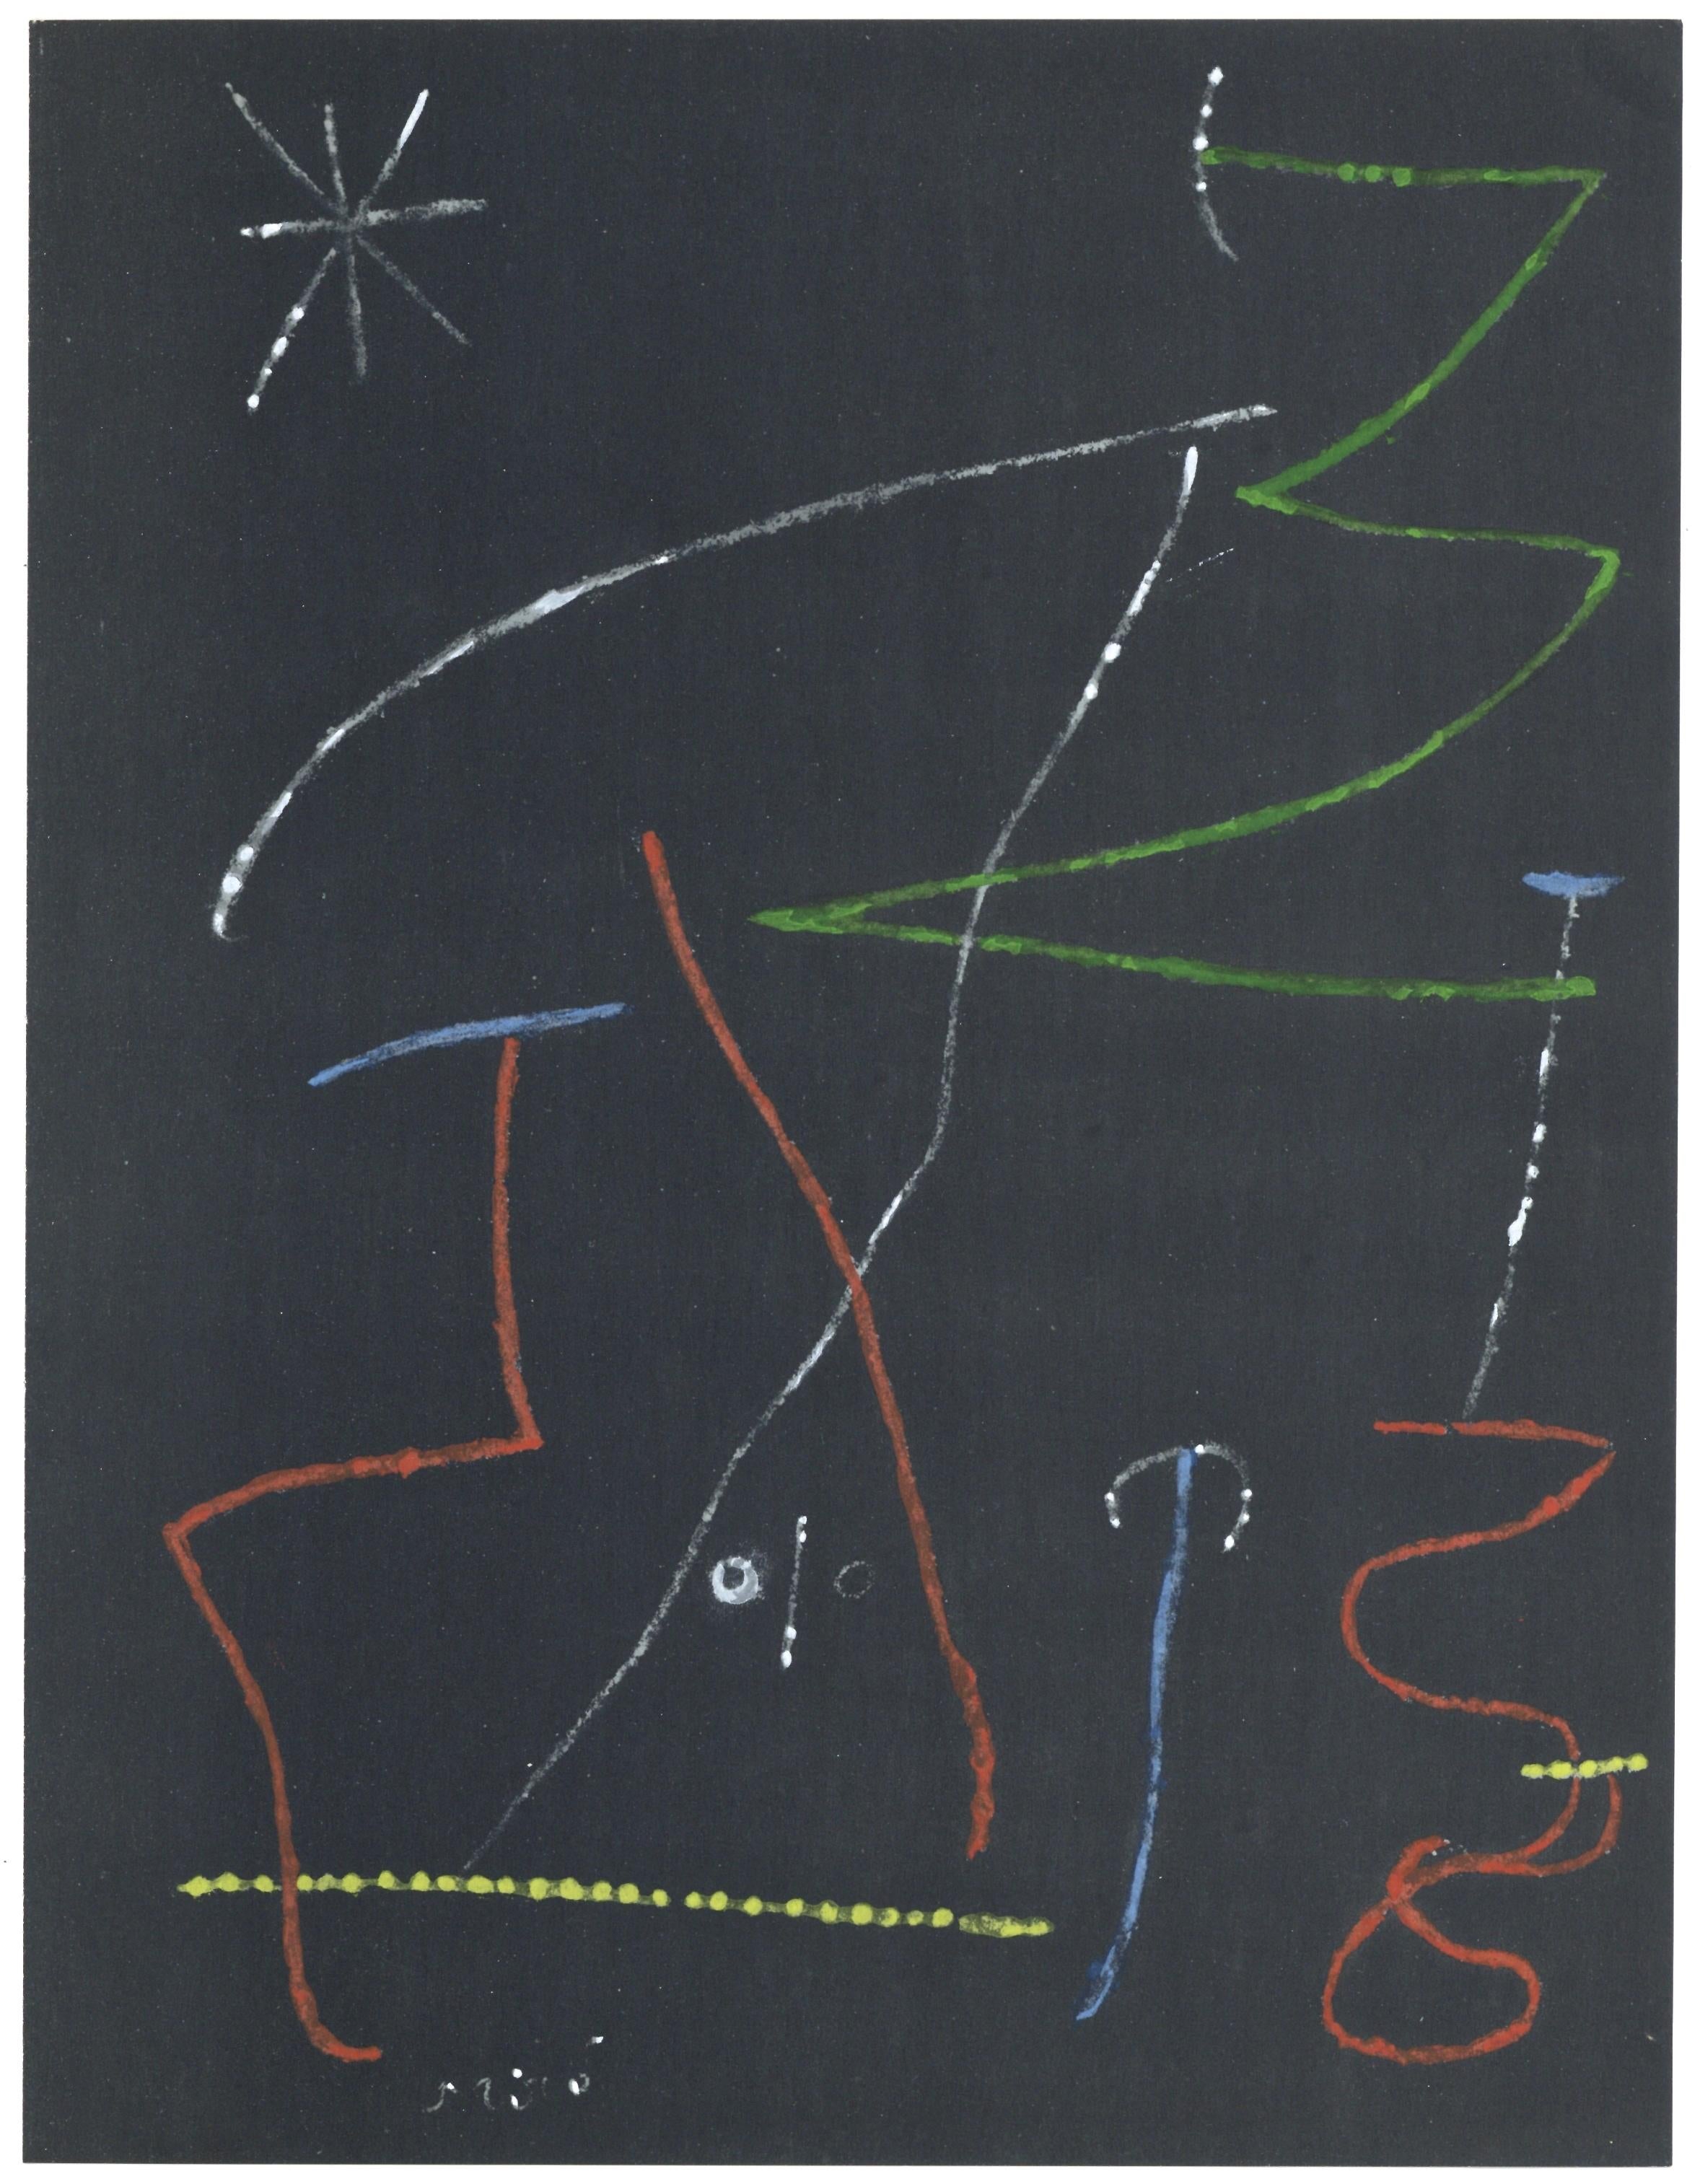 pochoir - Print by (after) Joan Miró